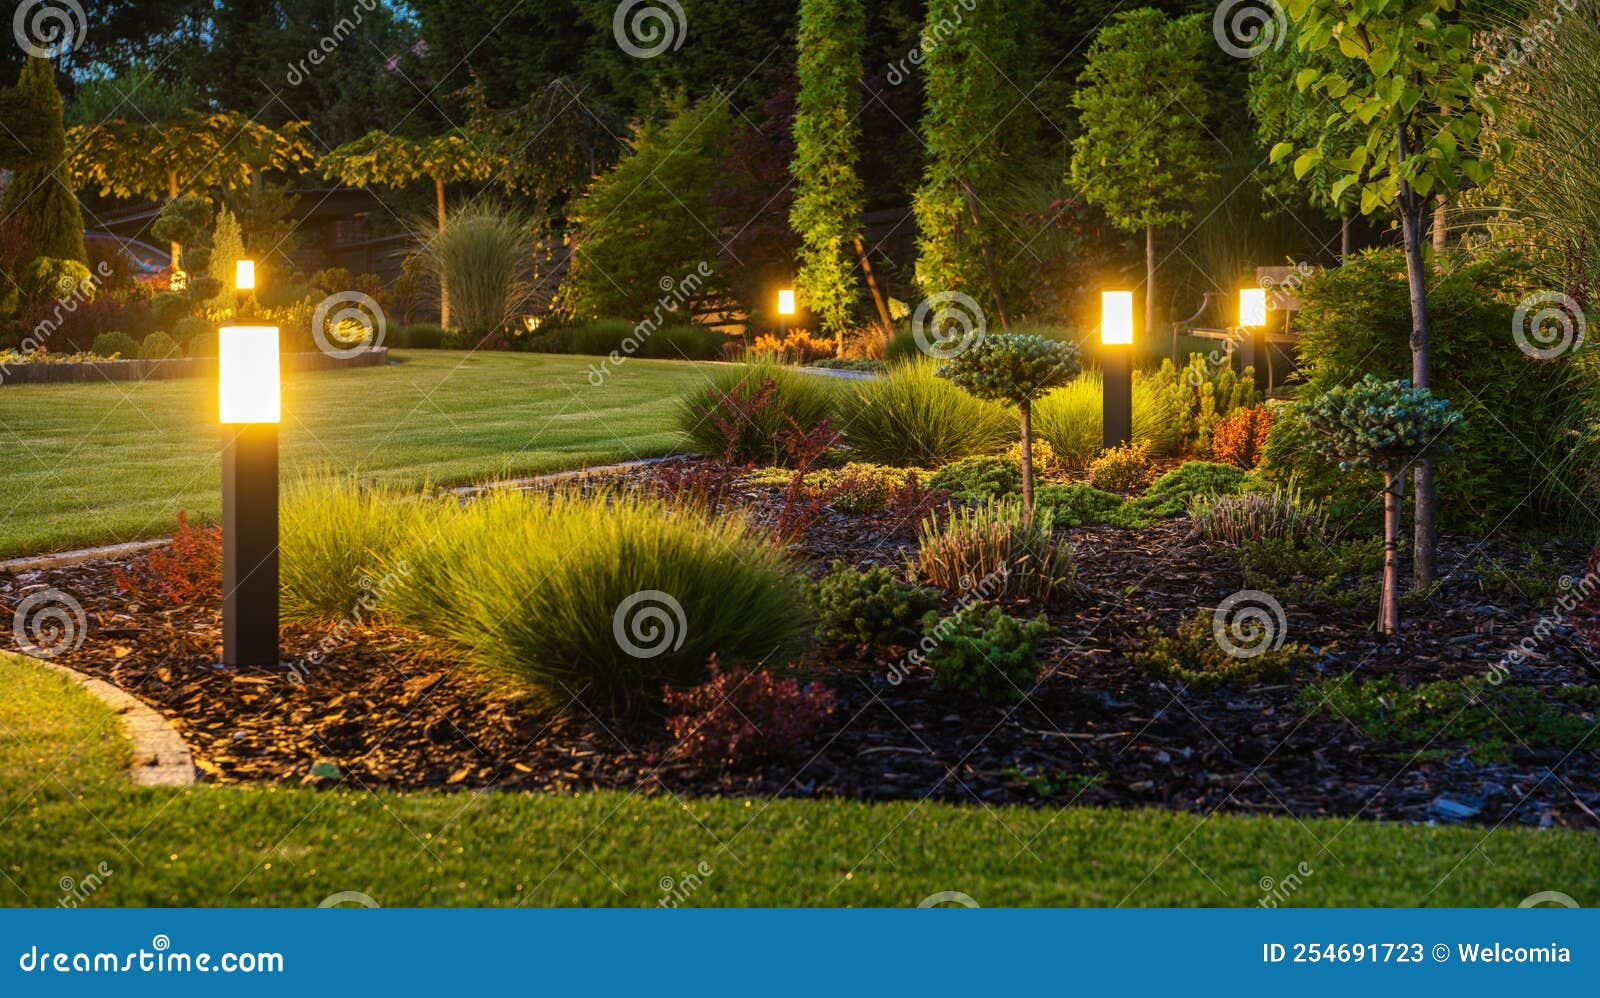 modern backyard outdoor led lighting systems